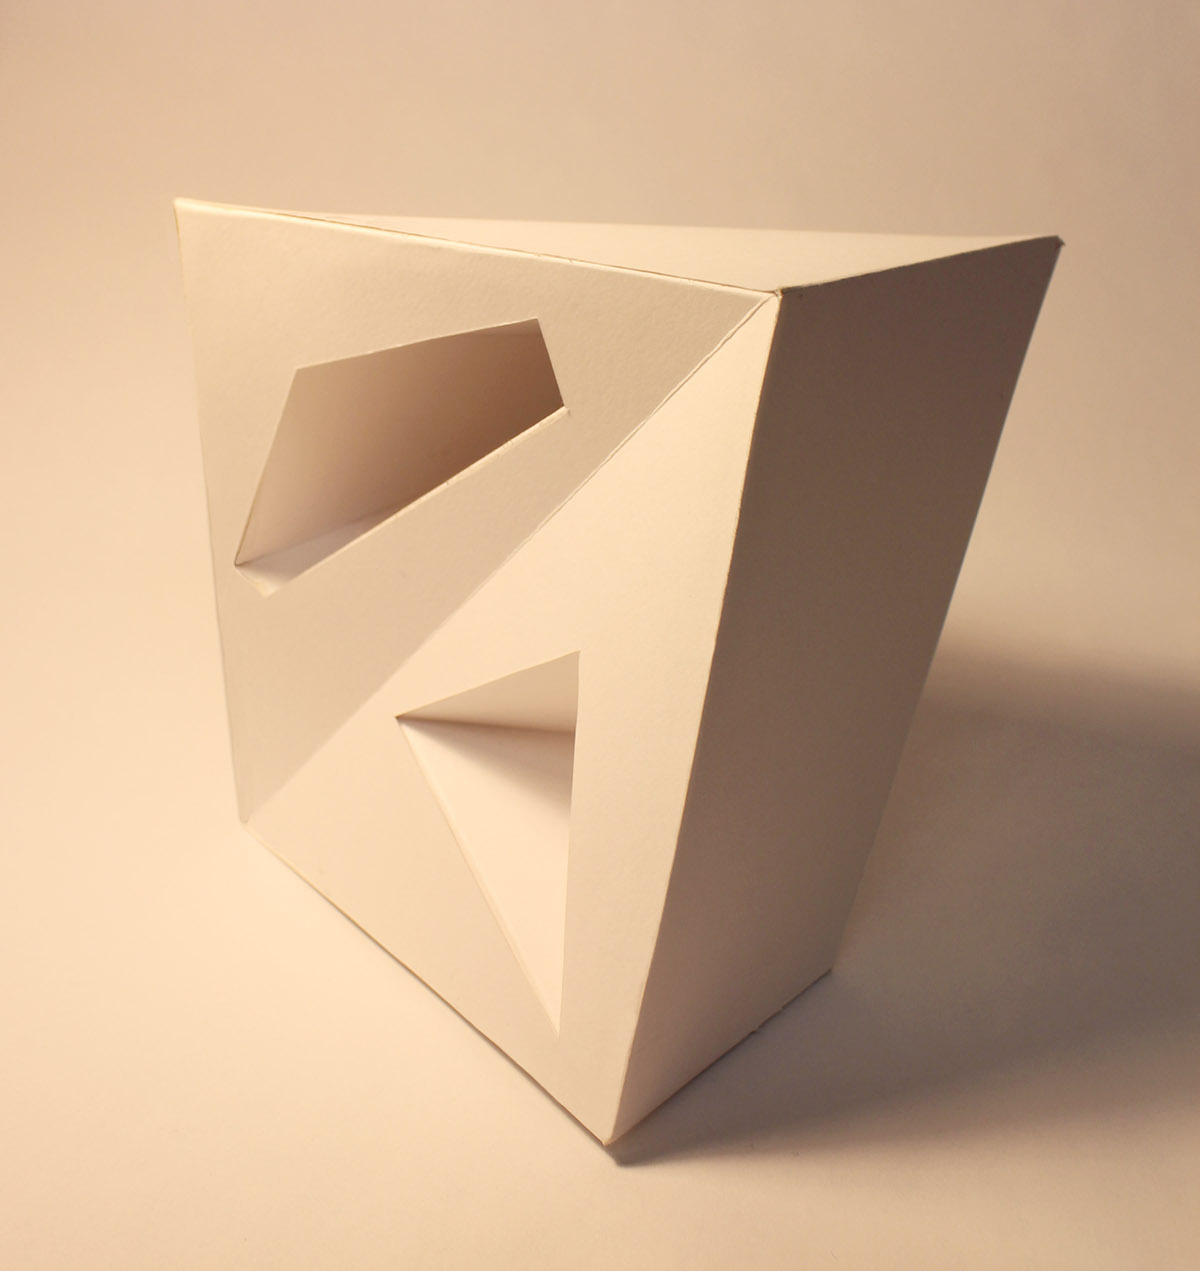 Truncated cube 3d design bristol board